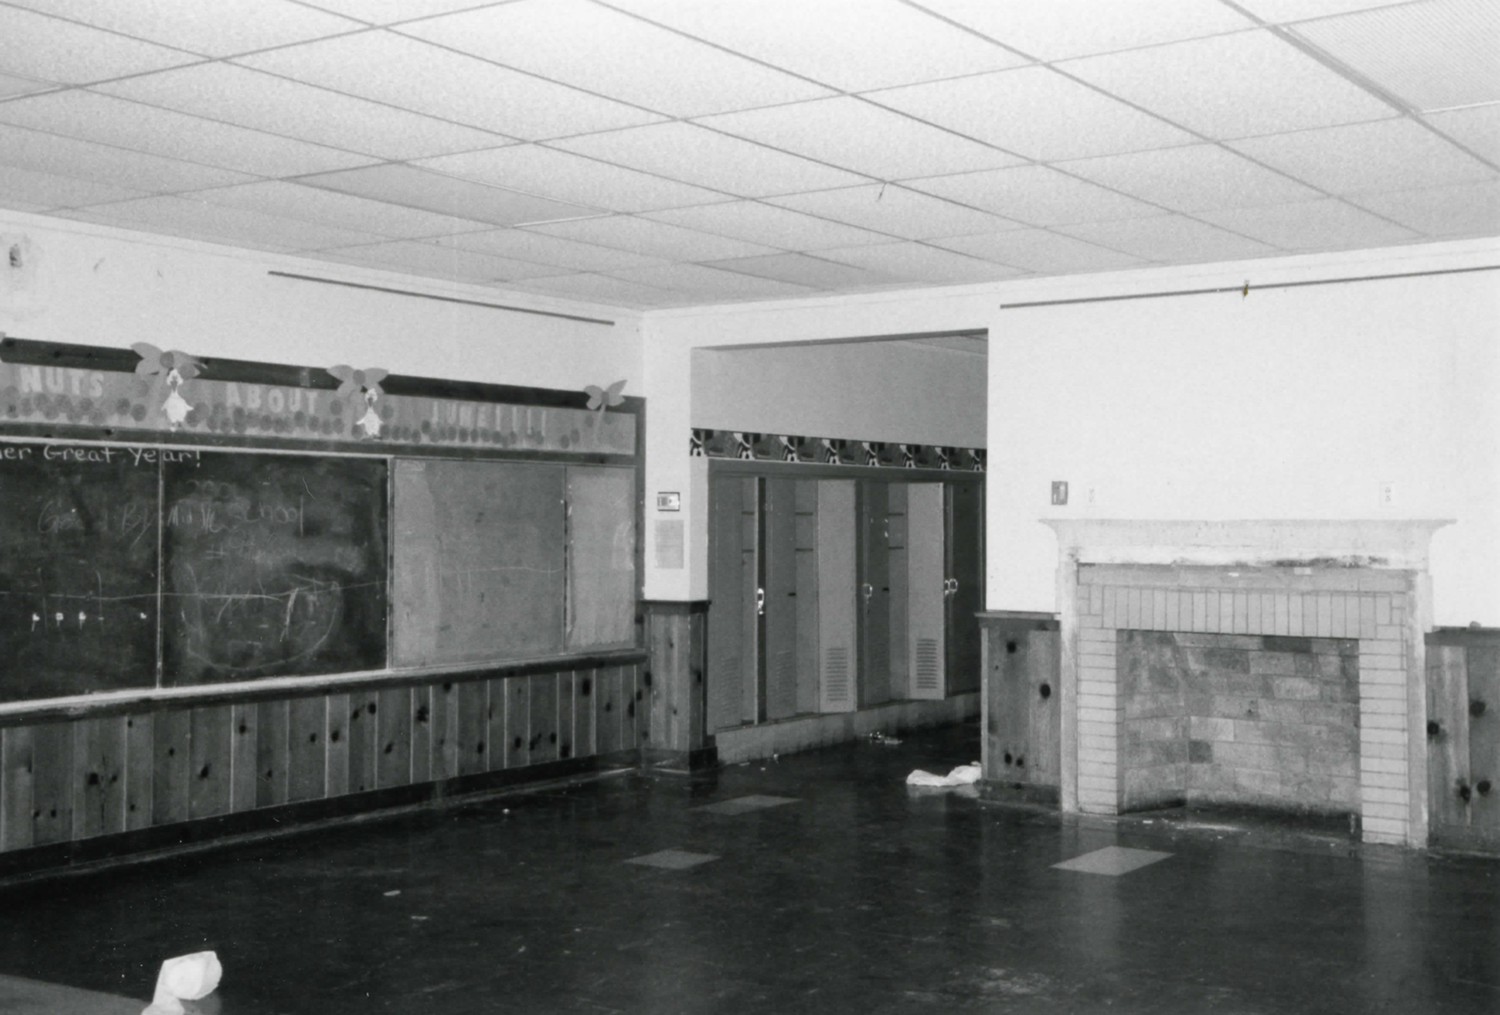 Springfield Township School, Ontario Ohio Supt. Office, 1949/1952 Additions (2002)